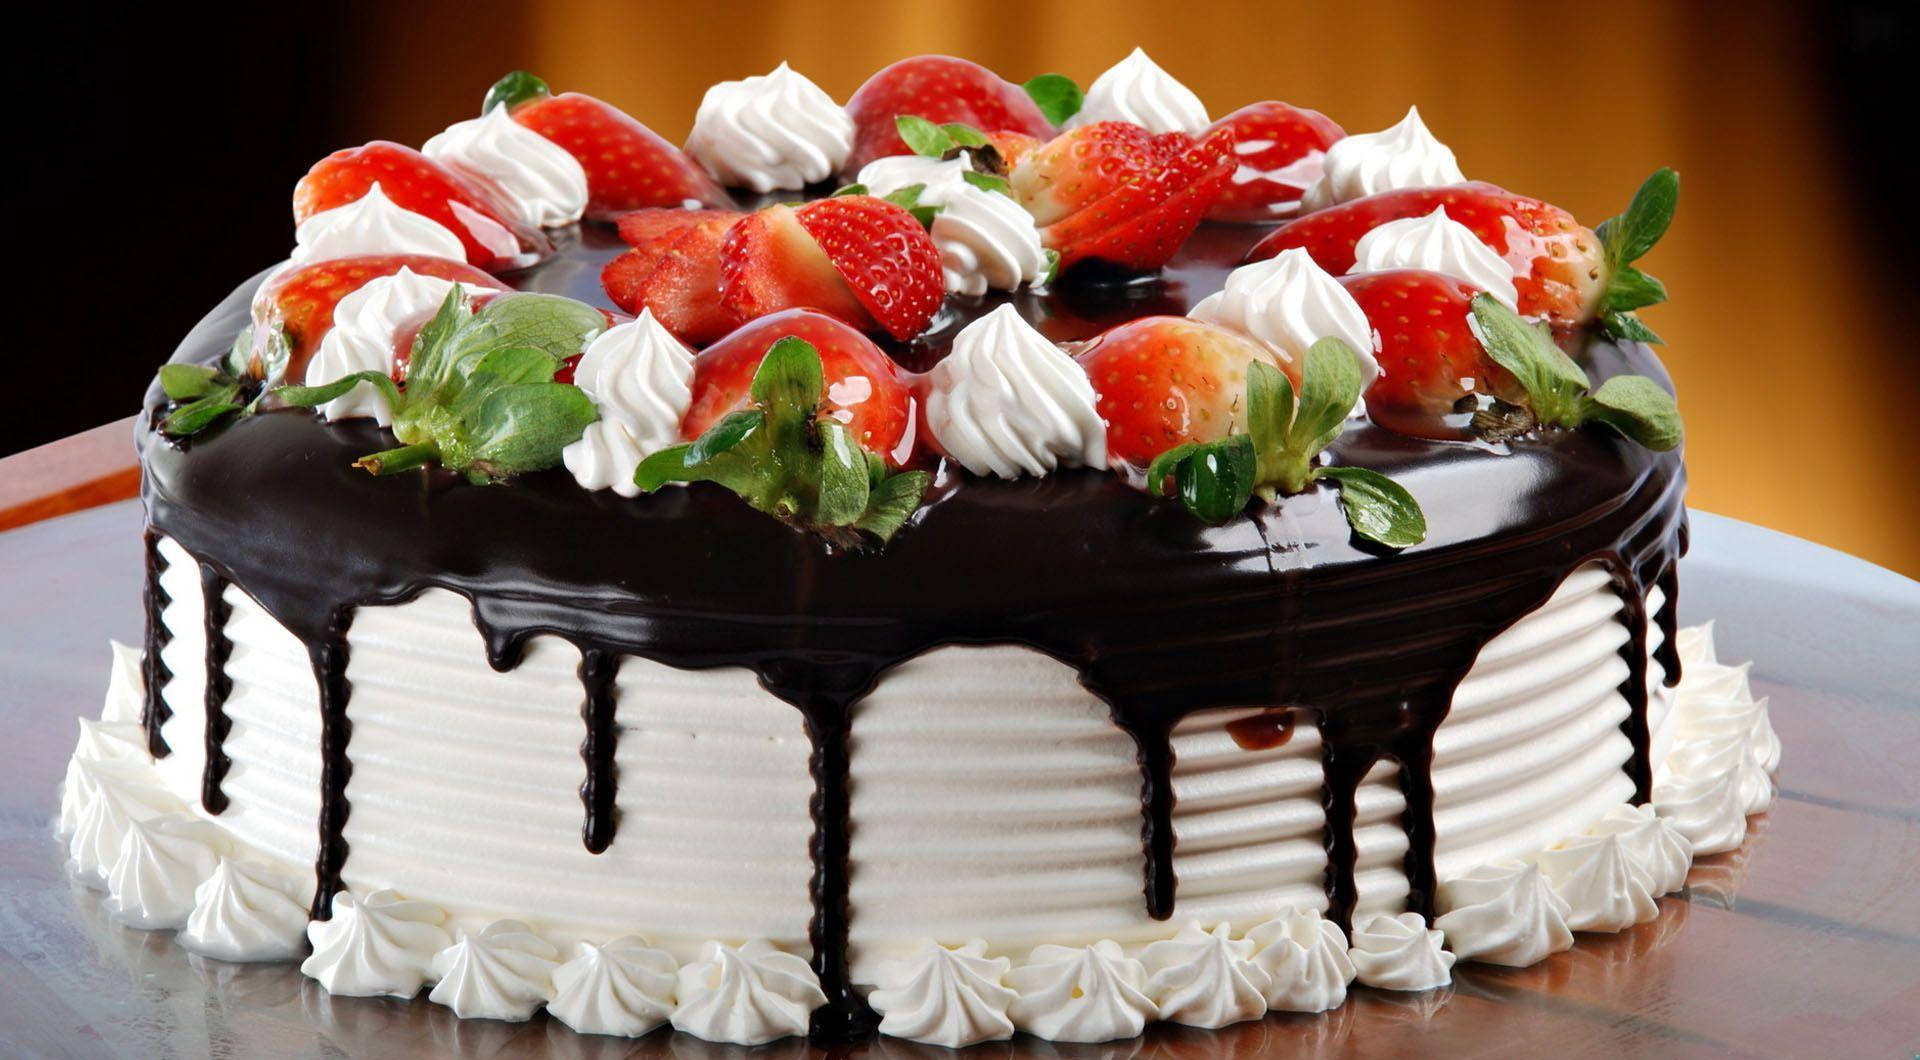 Birthday Cake With Chocolate And Strawberries